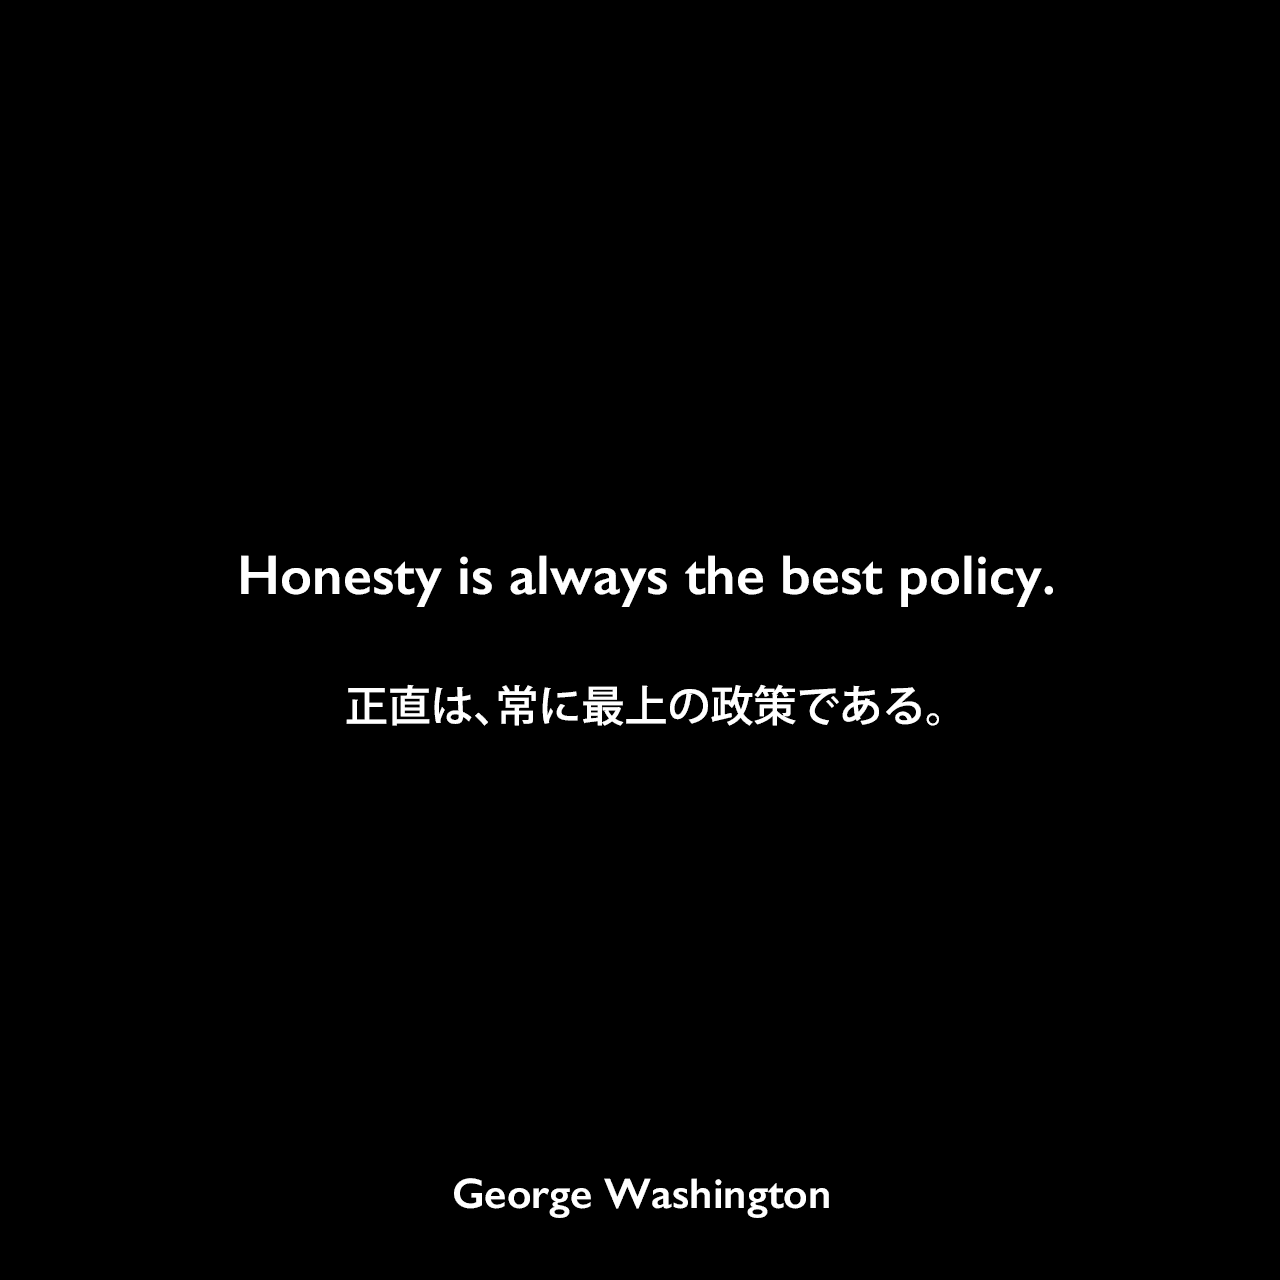 Honesty is always the best policy.正直は、常に最上の政策である。- 1796年の初代大統領退任挨拶よりGeorge Washington